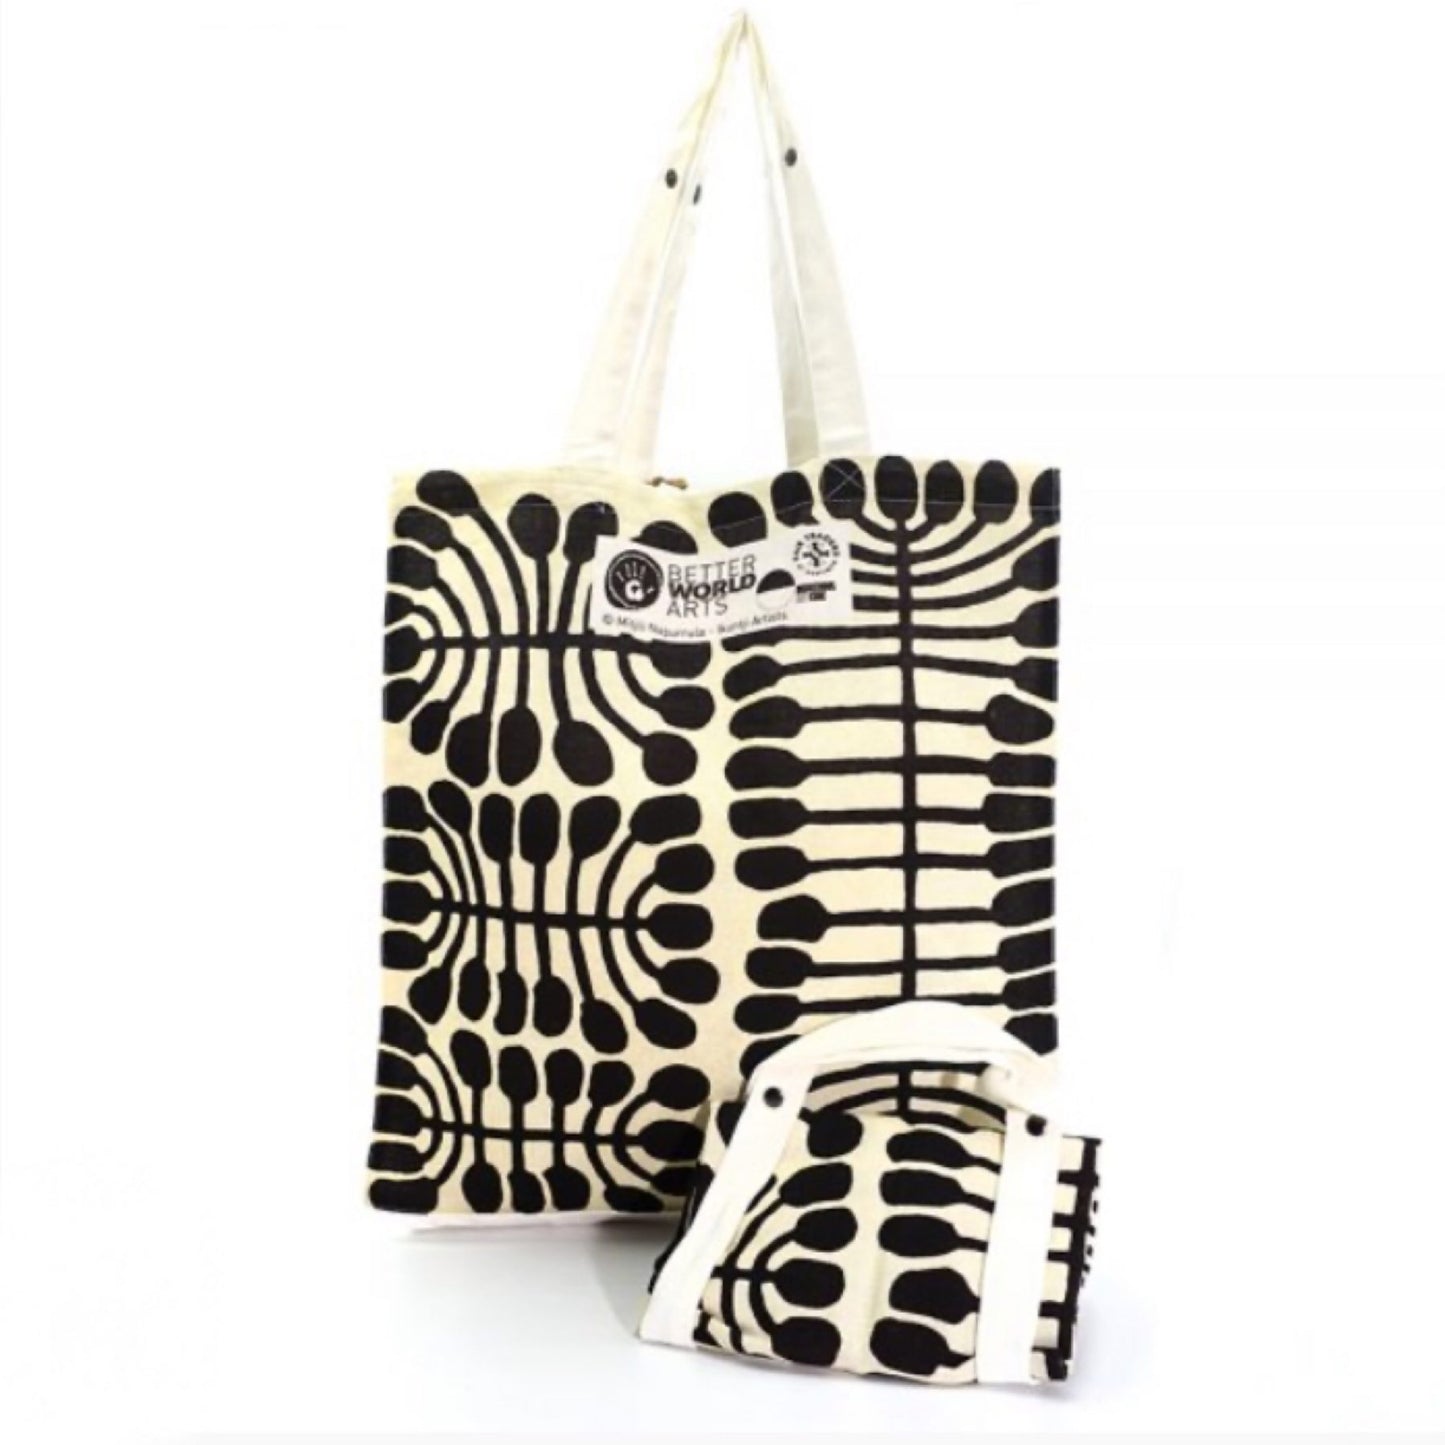 Better World Arts Foldable Cotton Bag - Artist Mitjili Napurrula